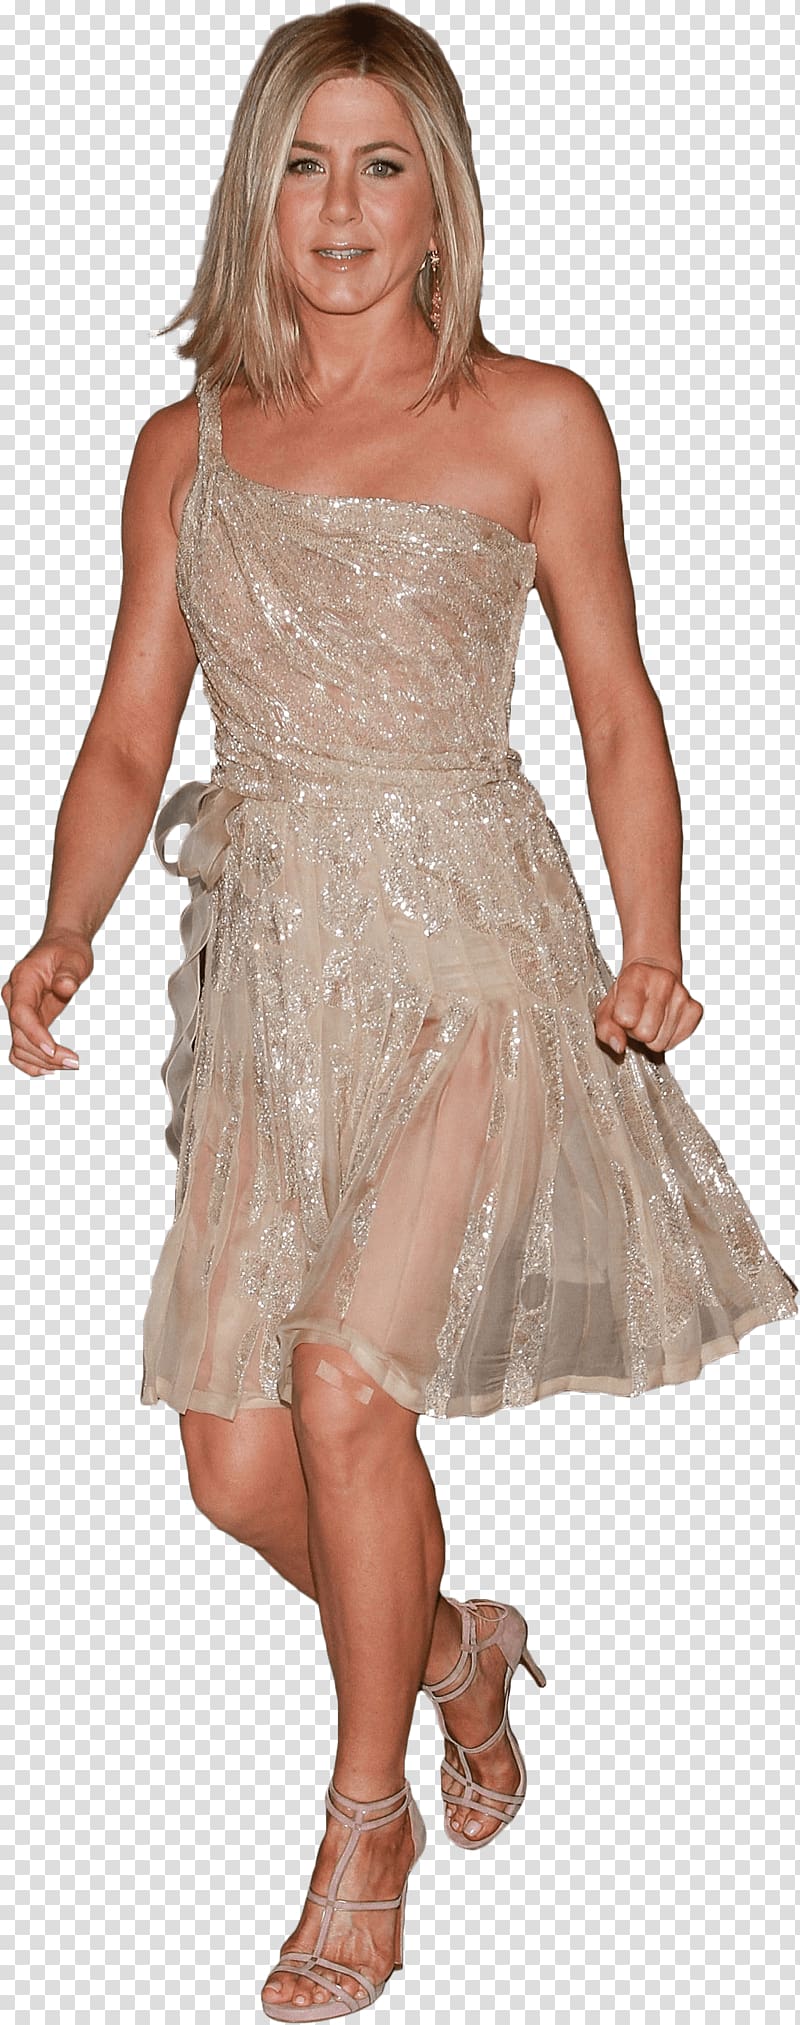 Jennifer Aniston Dress, walking stick transparent background PNG clipart